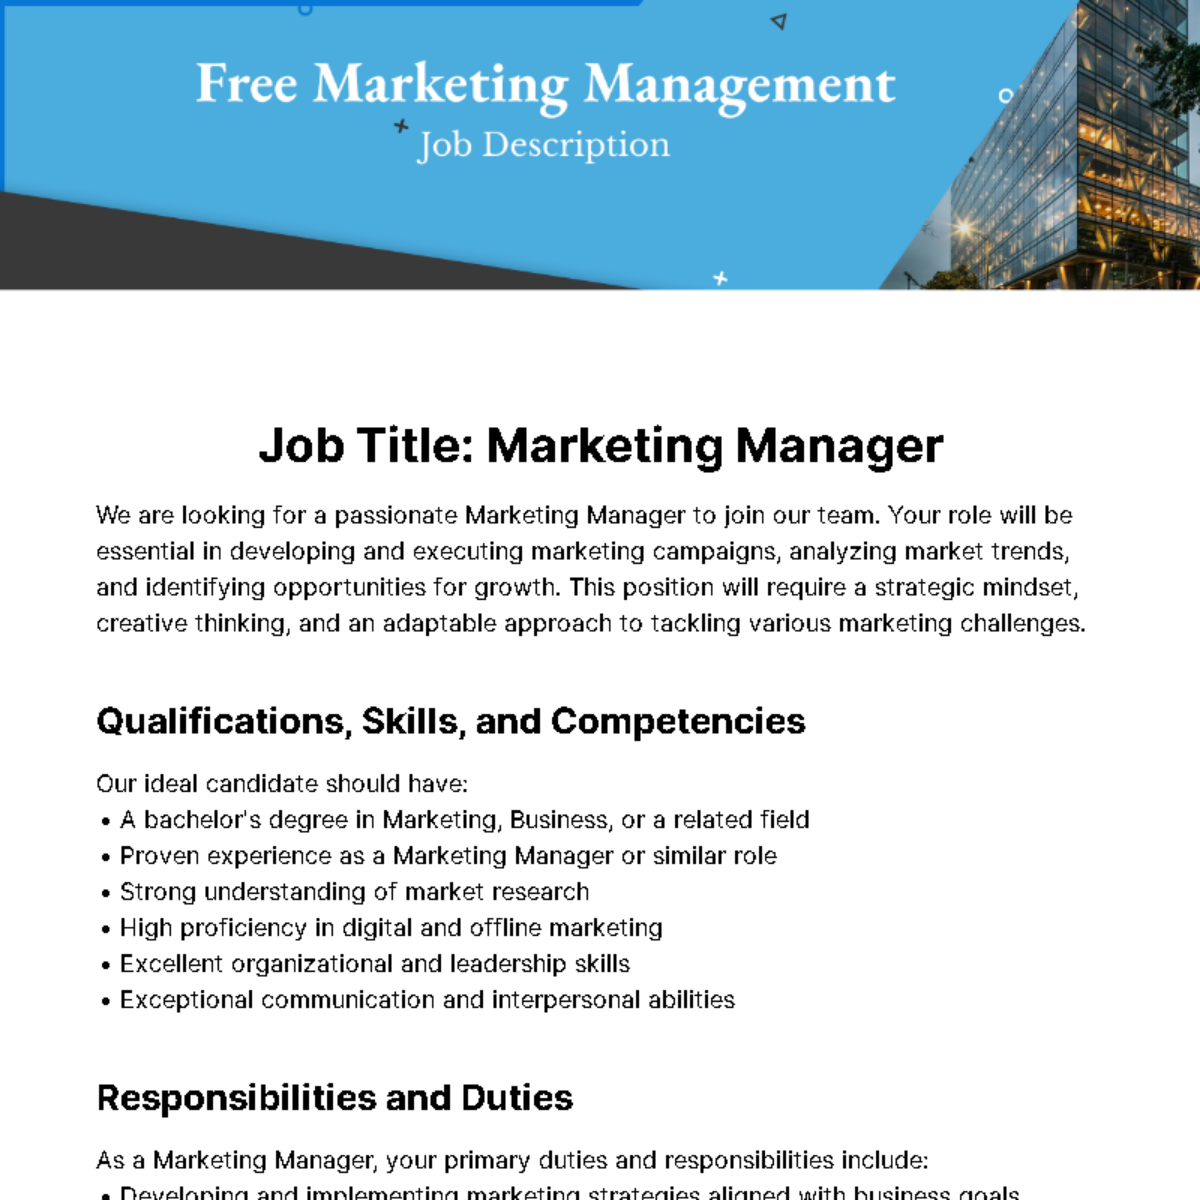 Free Marketing Management Job Description Template